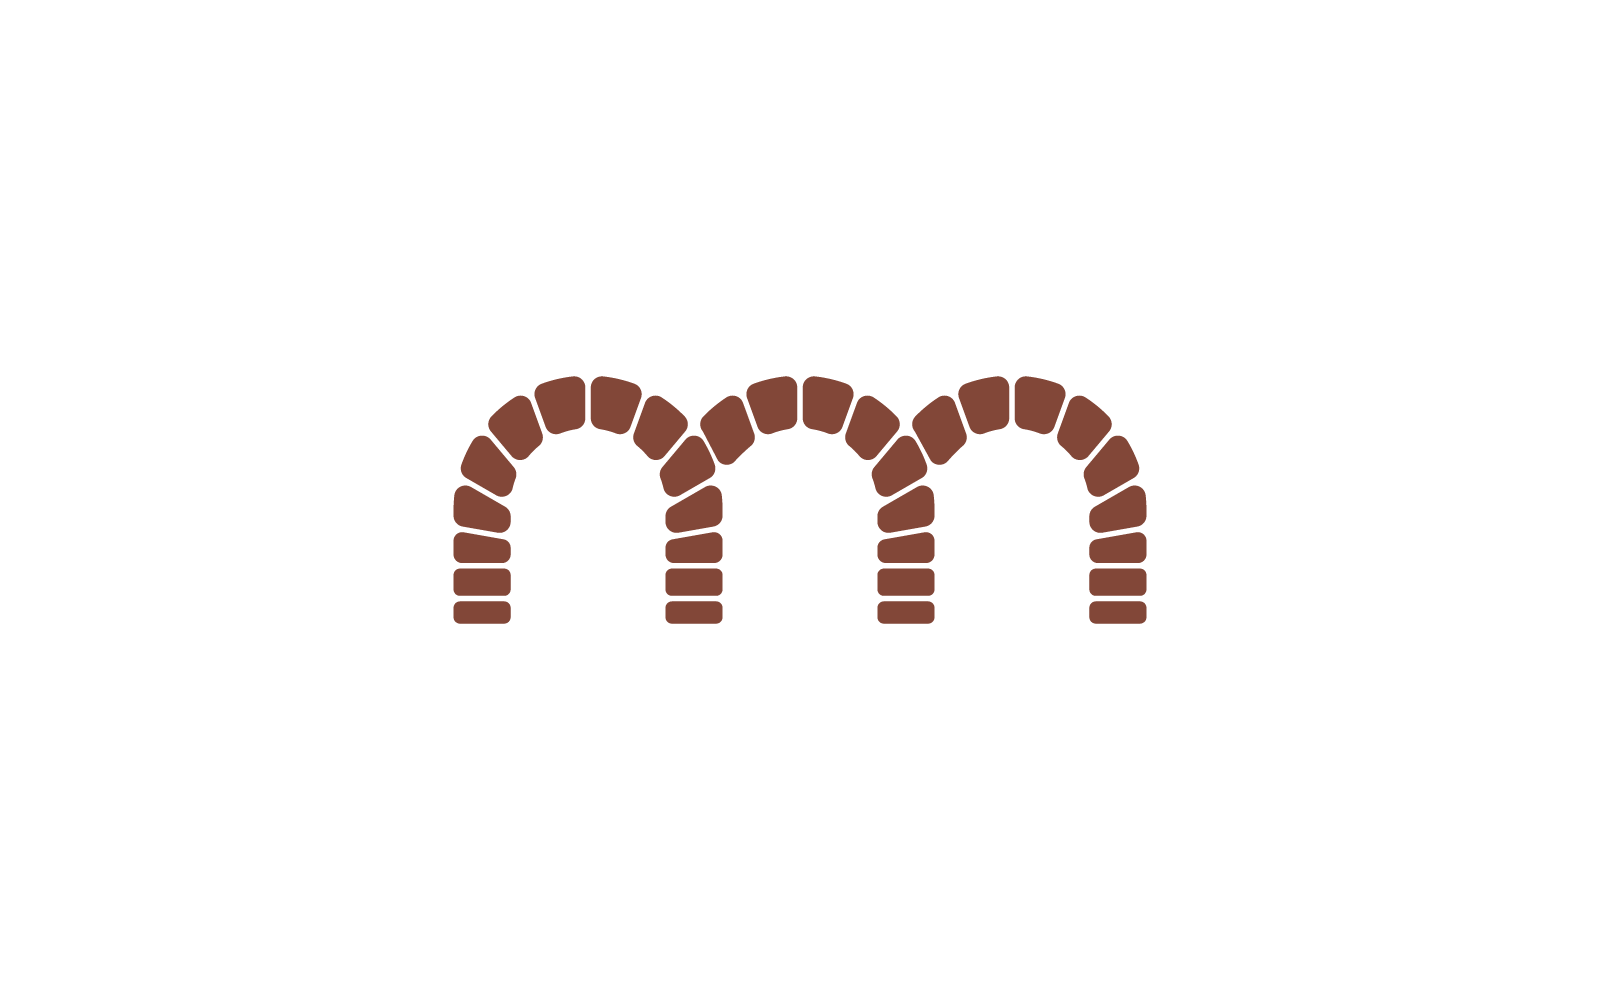 Brick bridge logo vector ilustration flat design template